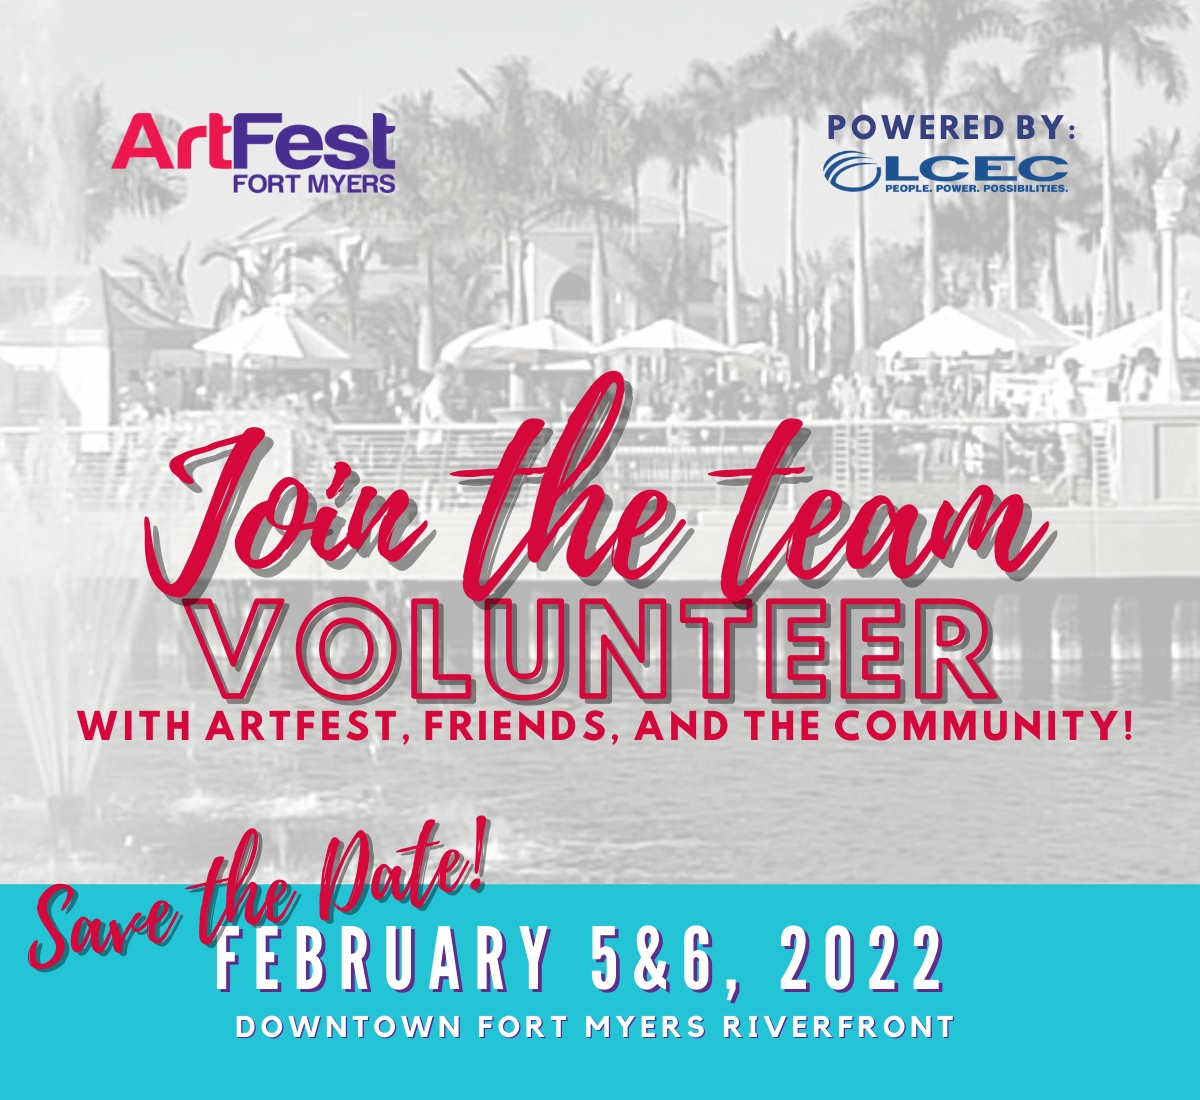 ArtFest Fort Myers/ Volunteers